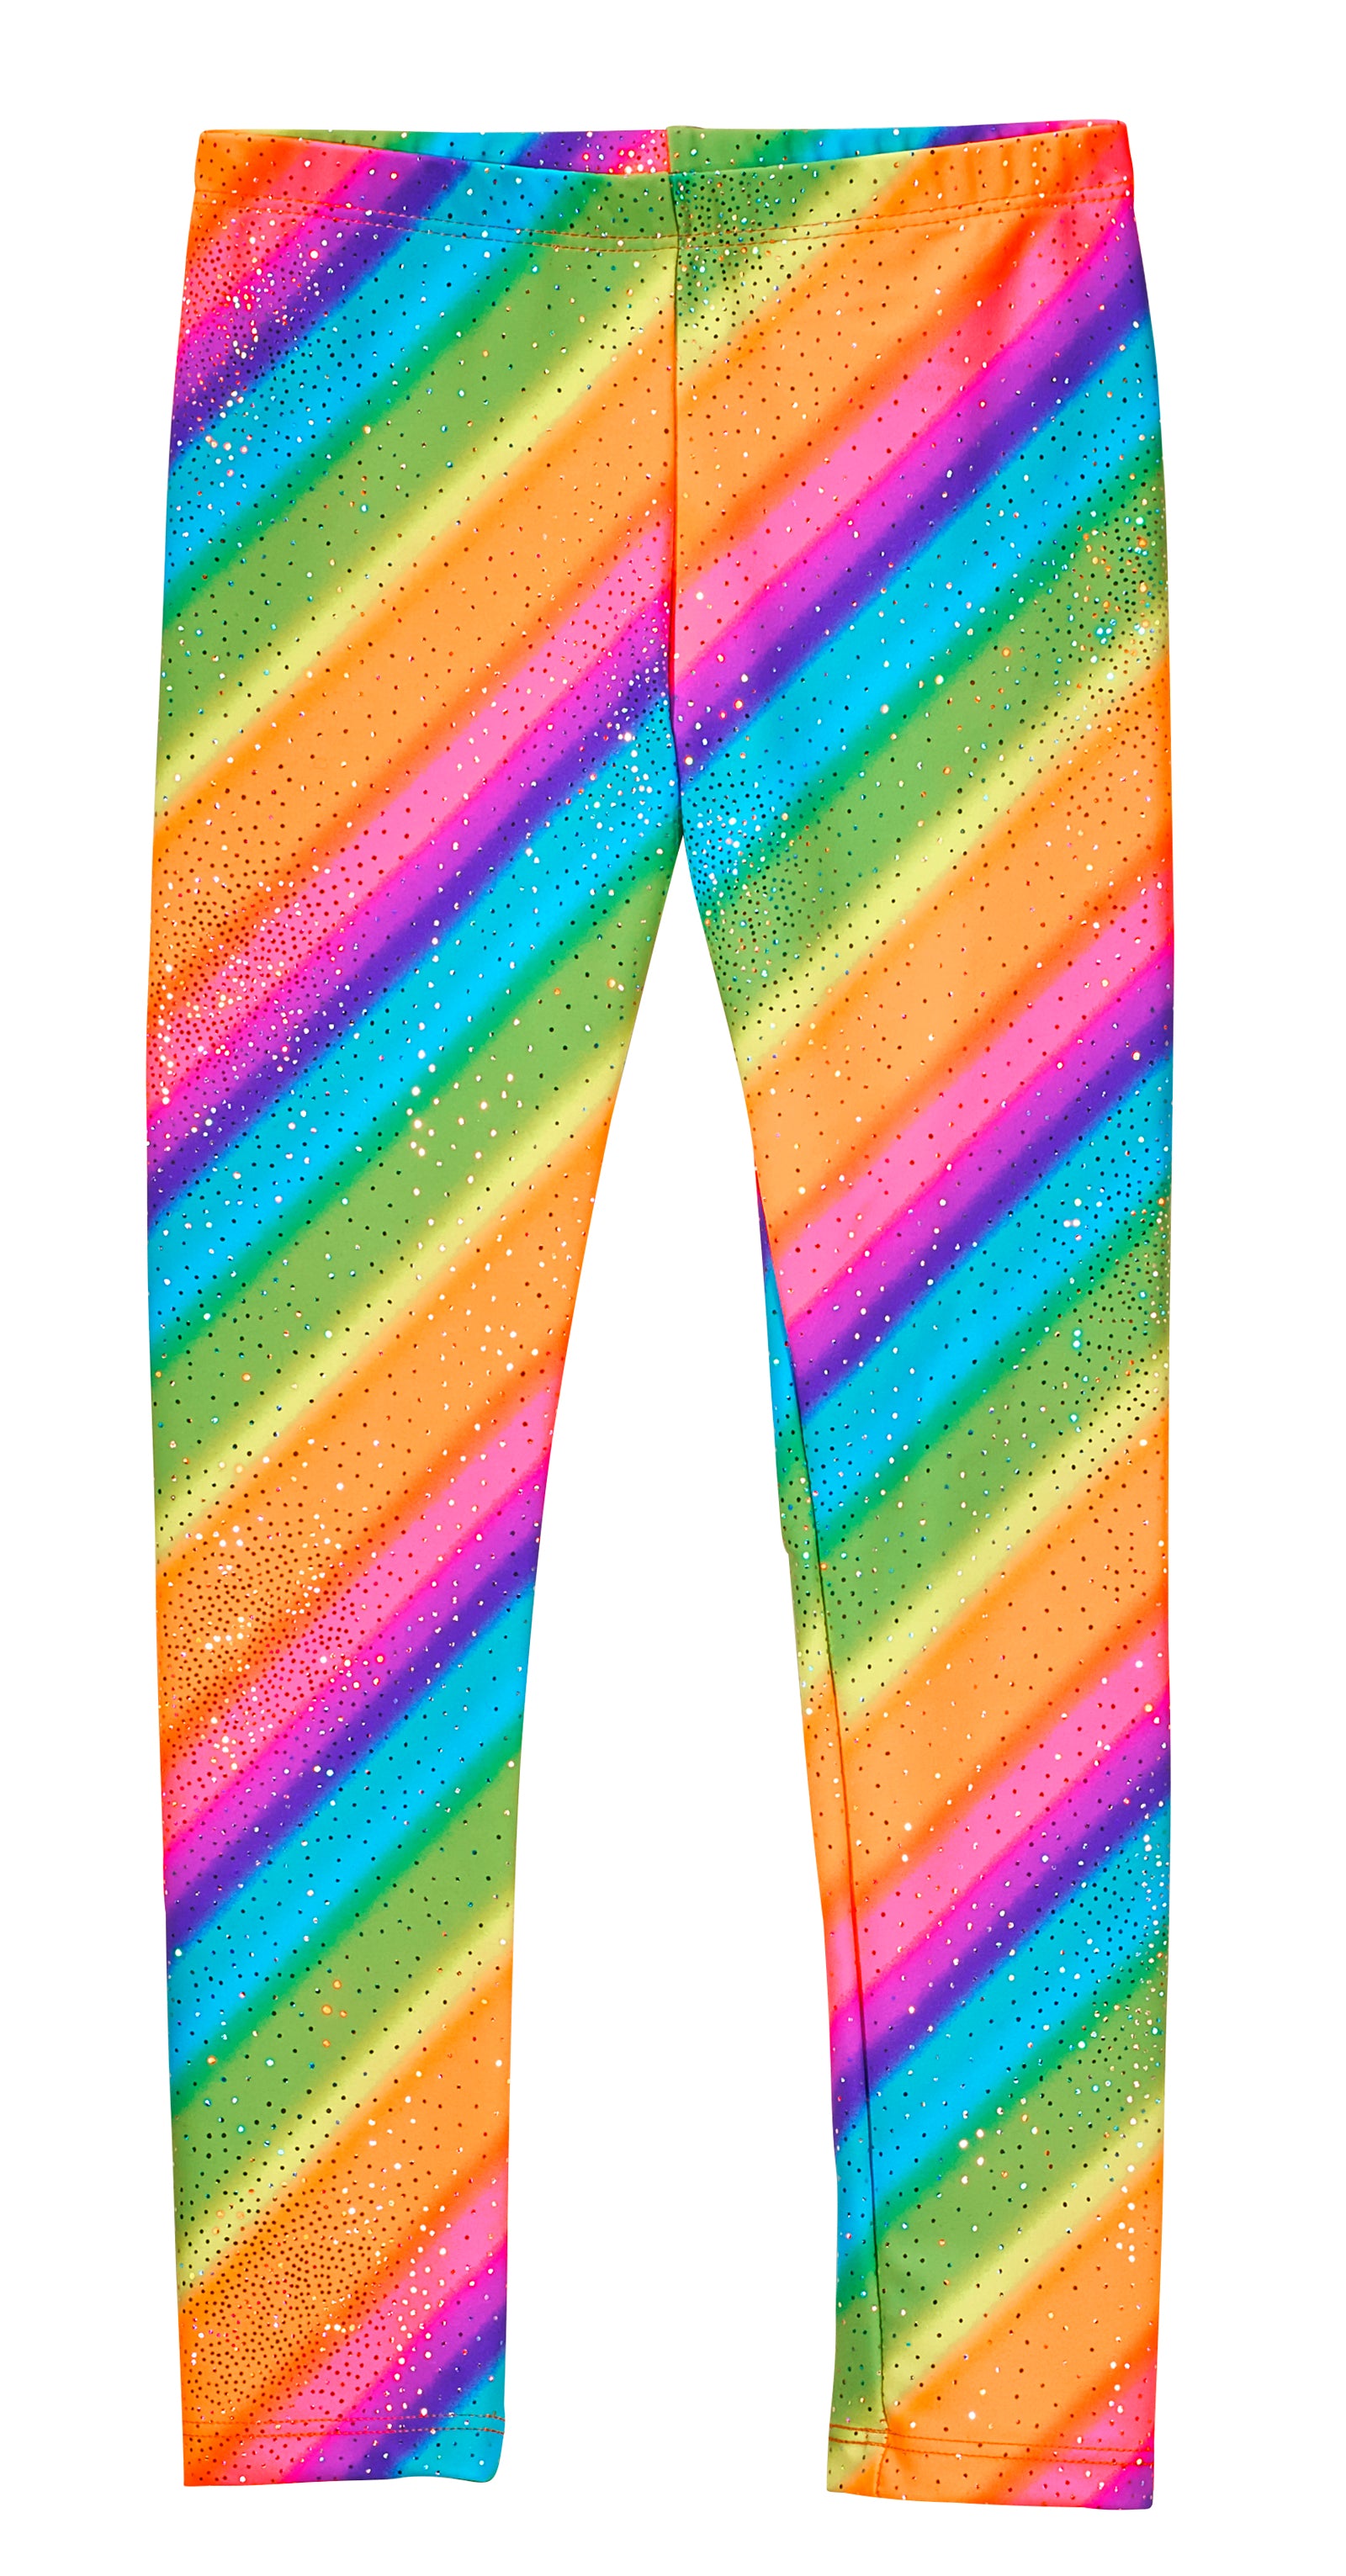 Organic Turquoise Rainbow Print Yoga Pants, Trousers and Shorts